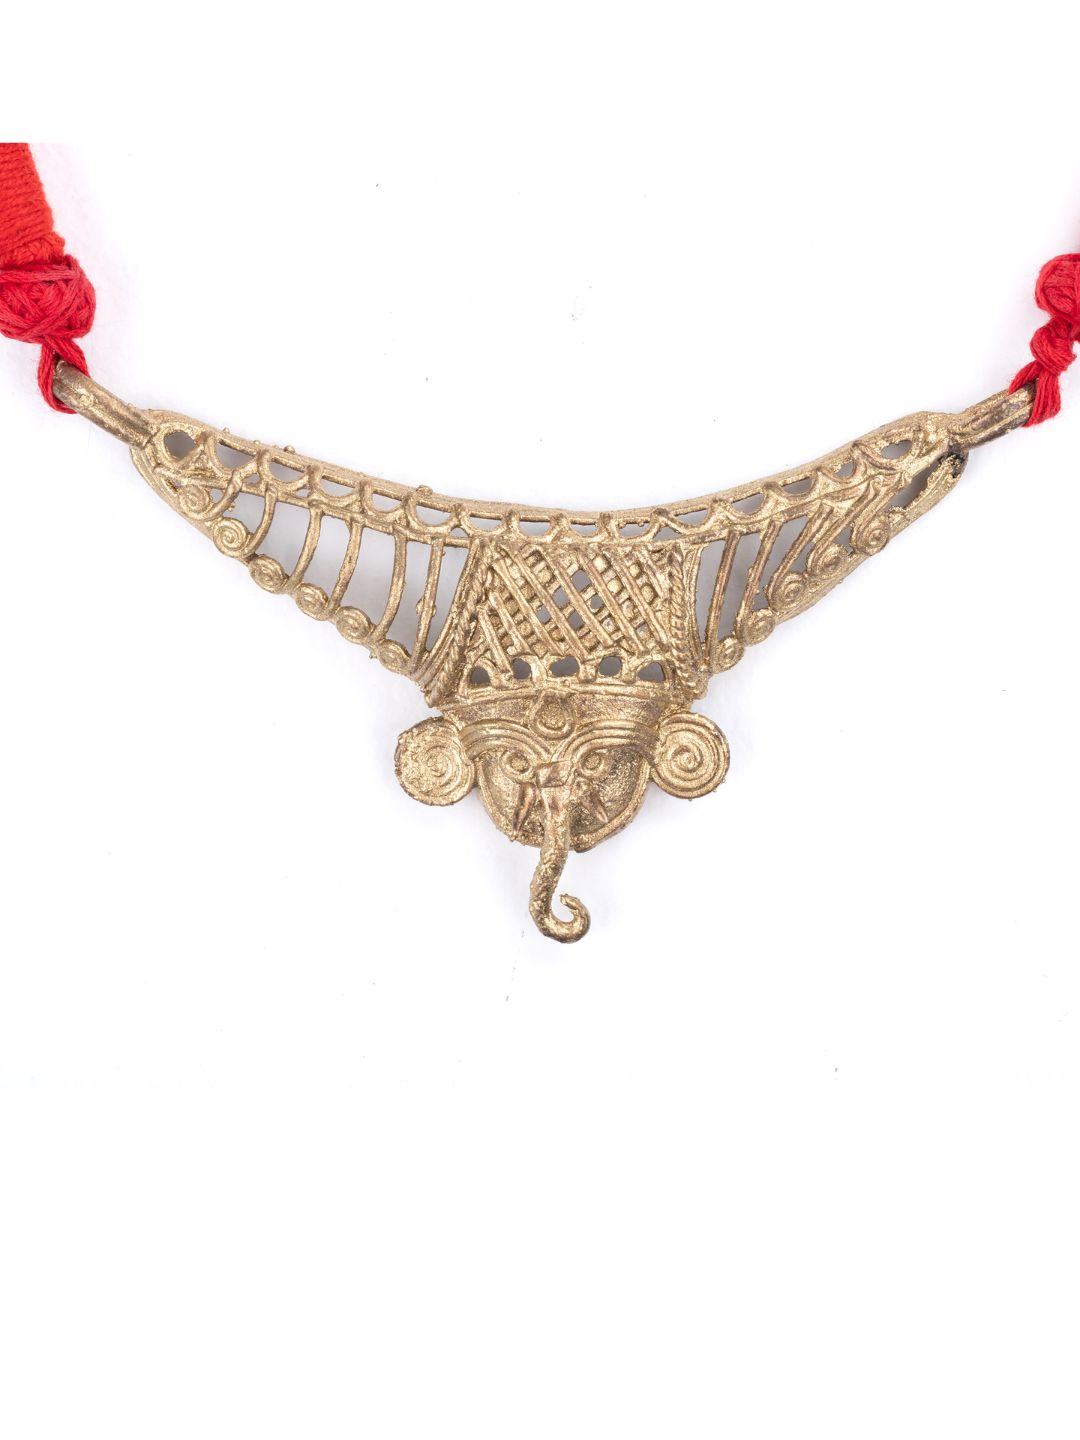 Handmade Red Ganesh Dokra Hasuli Jewellery